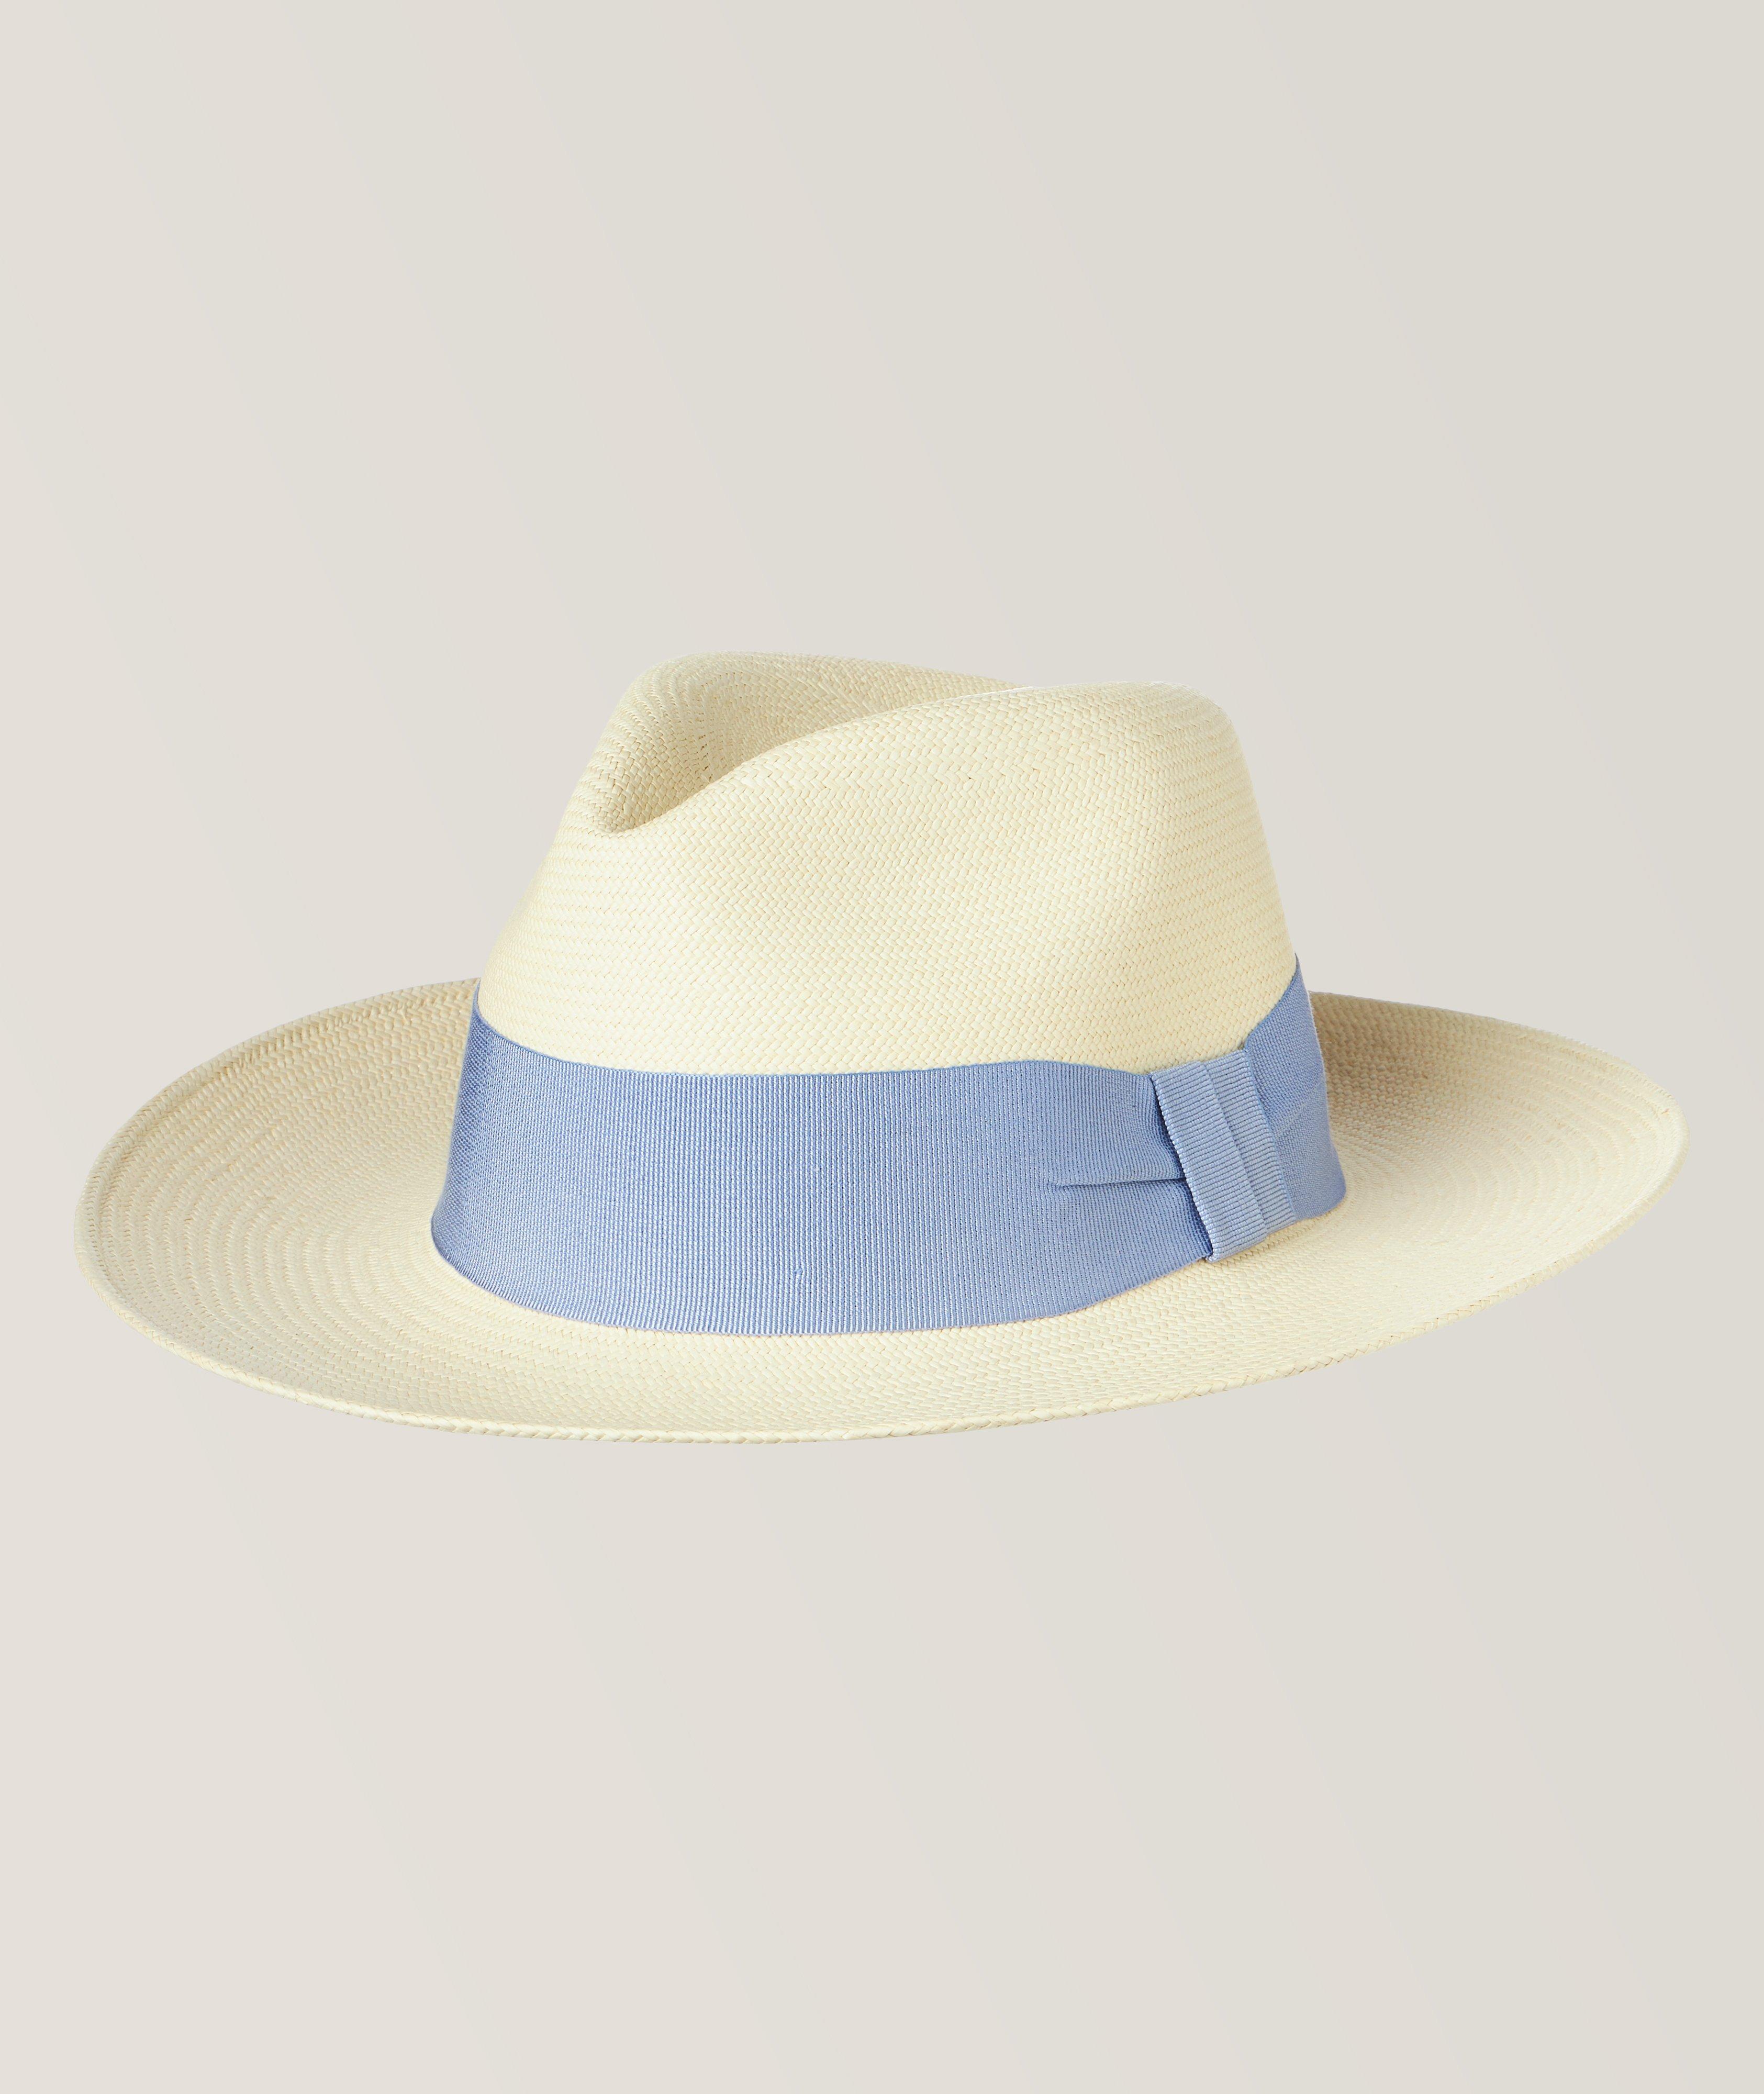 Rafael Panama Hat image 0